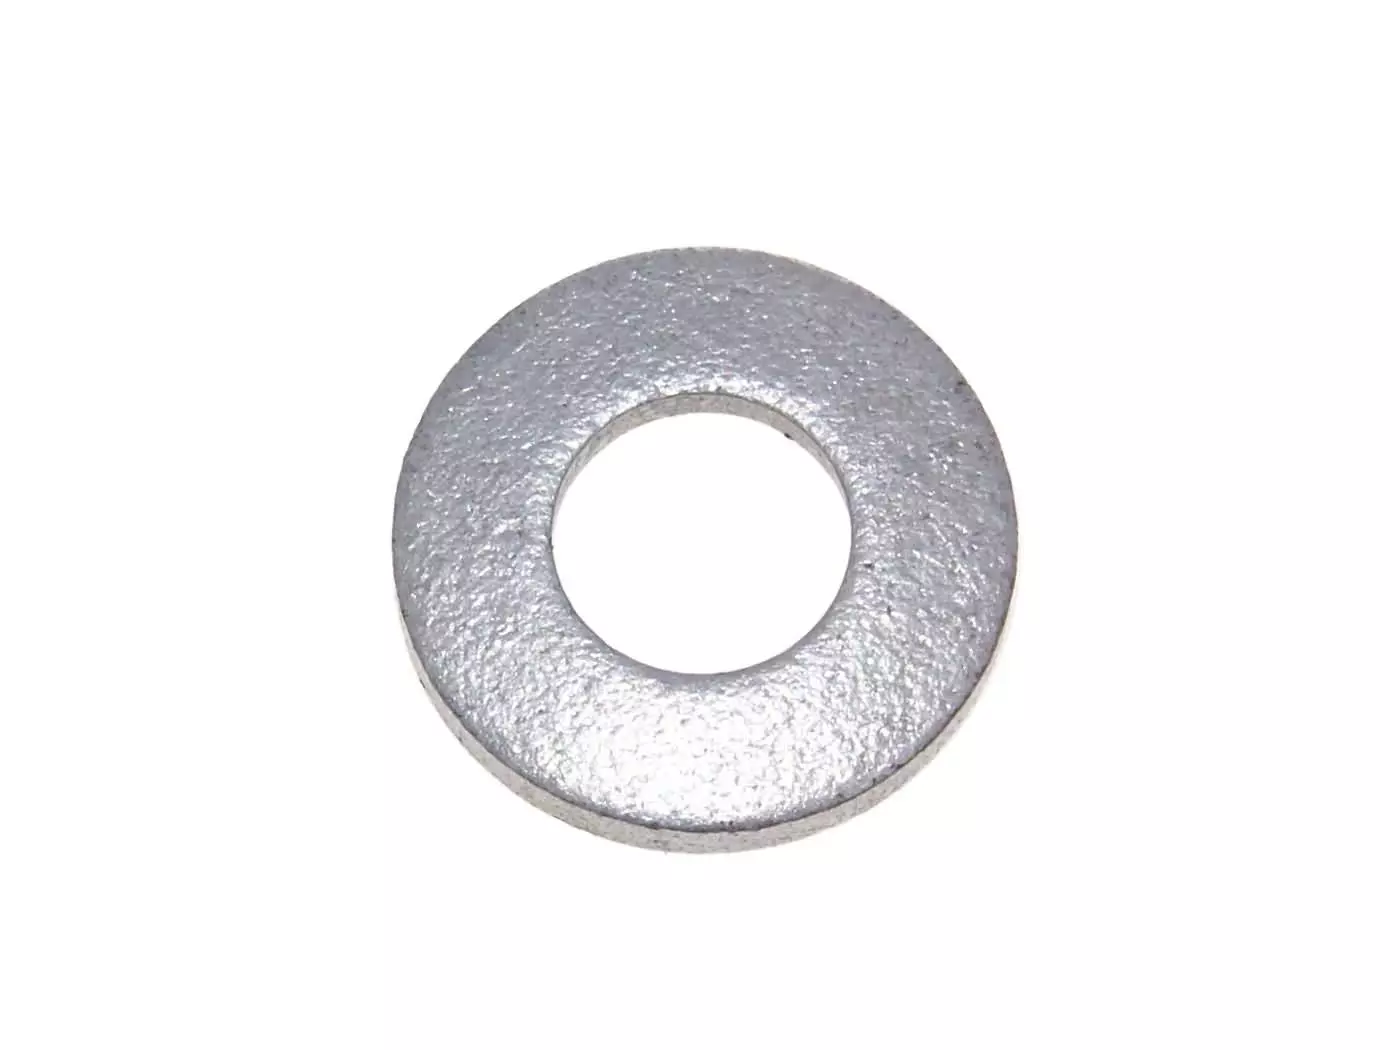 Lock Washer For Crankshaft For Minarelli (10mm)